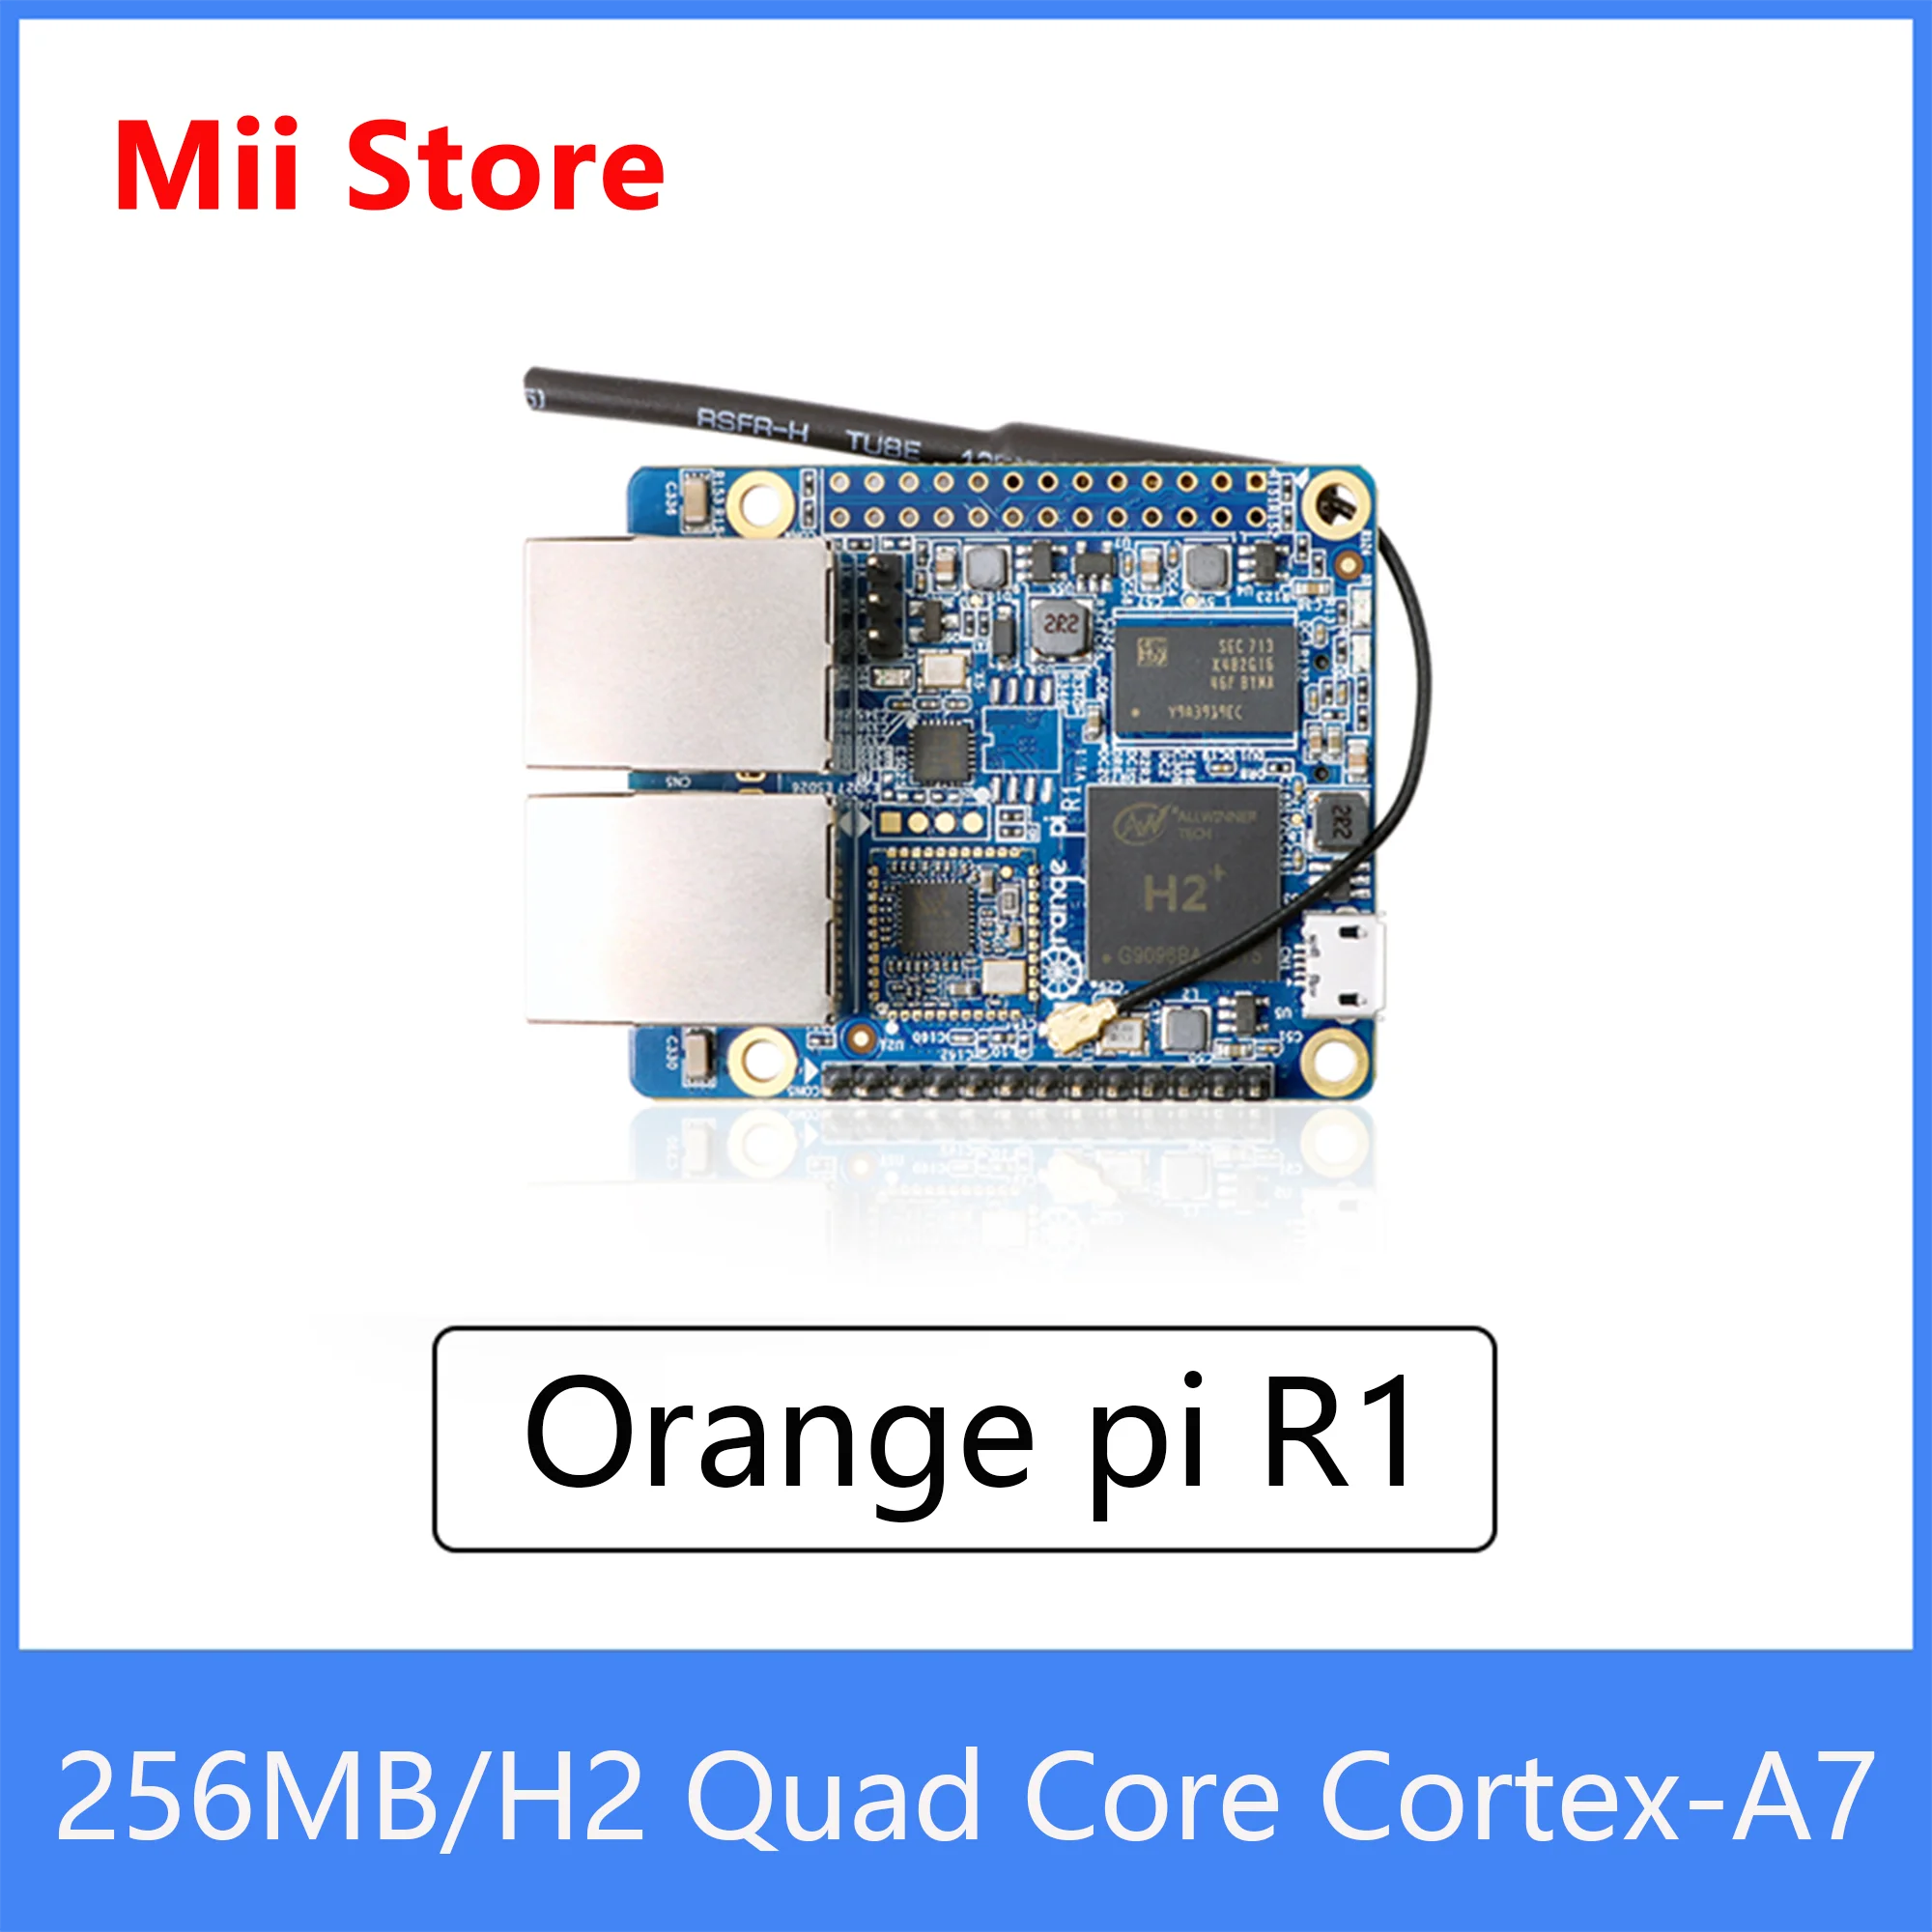 

Orange Pi R1 Development board 256MB H2 Quad Core Cortex-A7 Open-Source Board, Support Dual network ports onboard Wifi